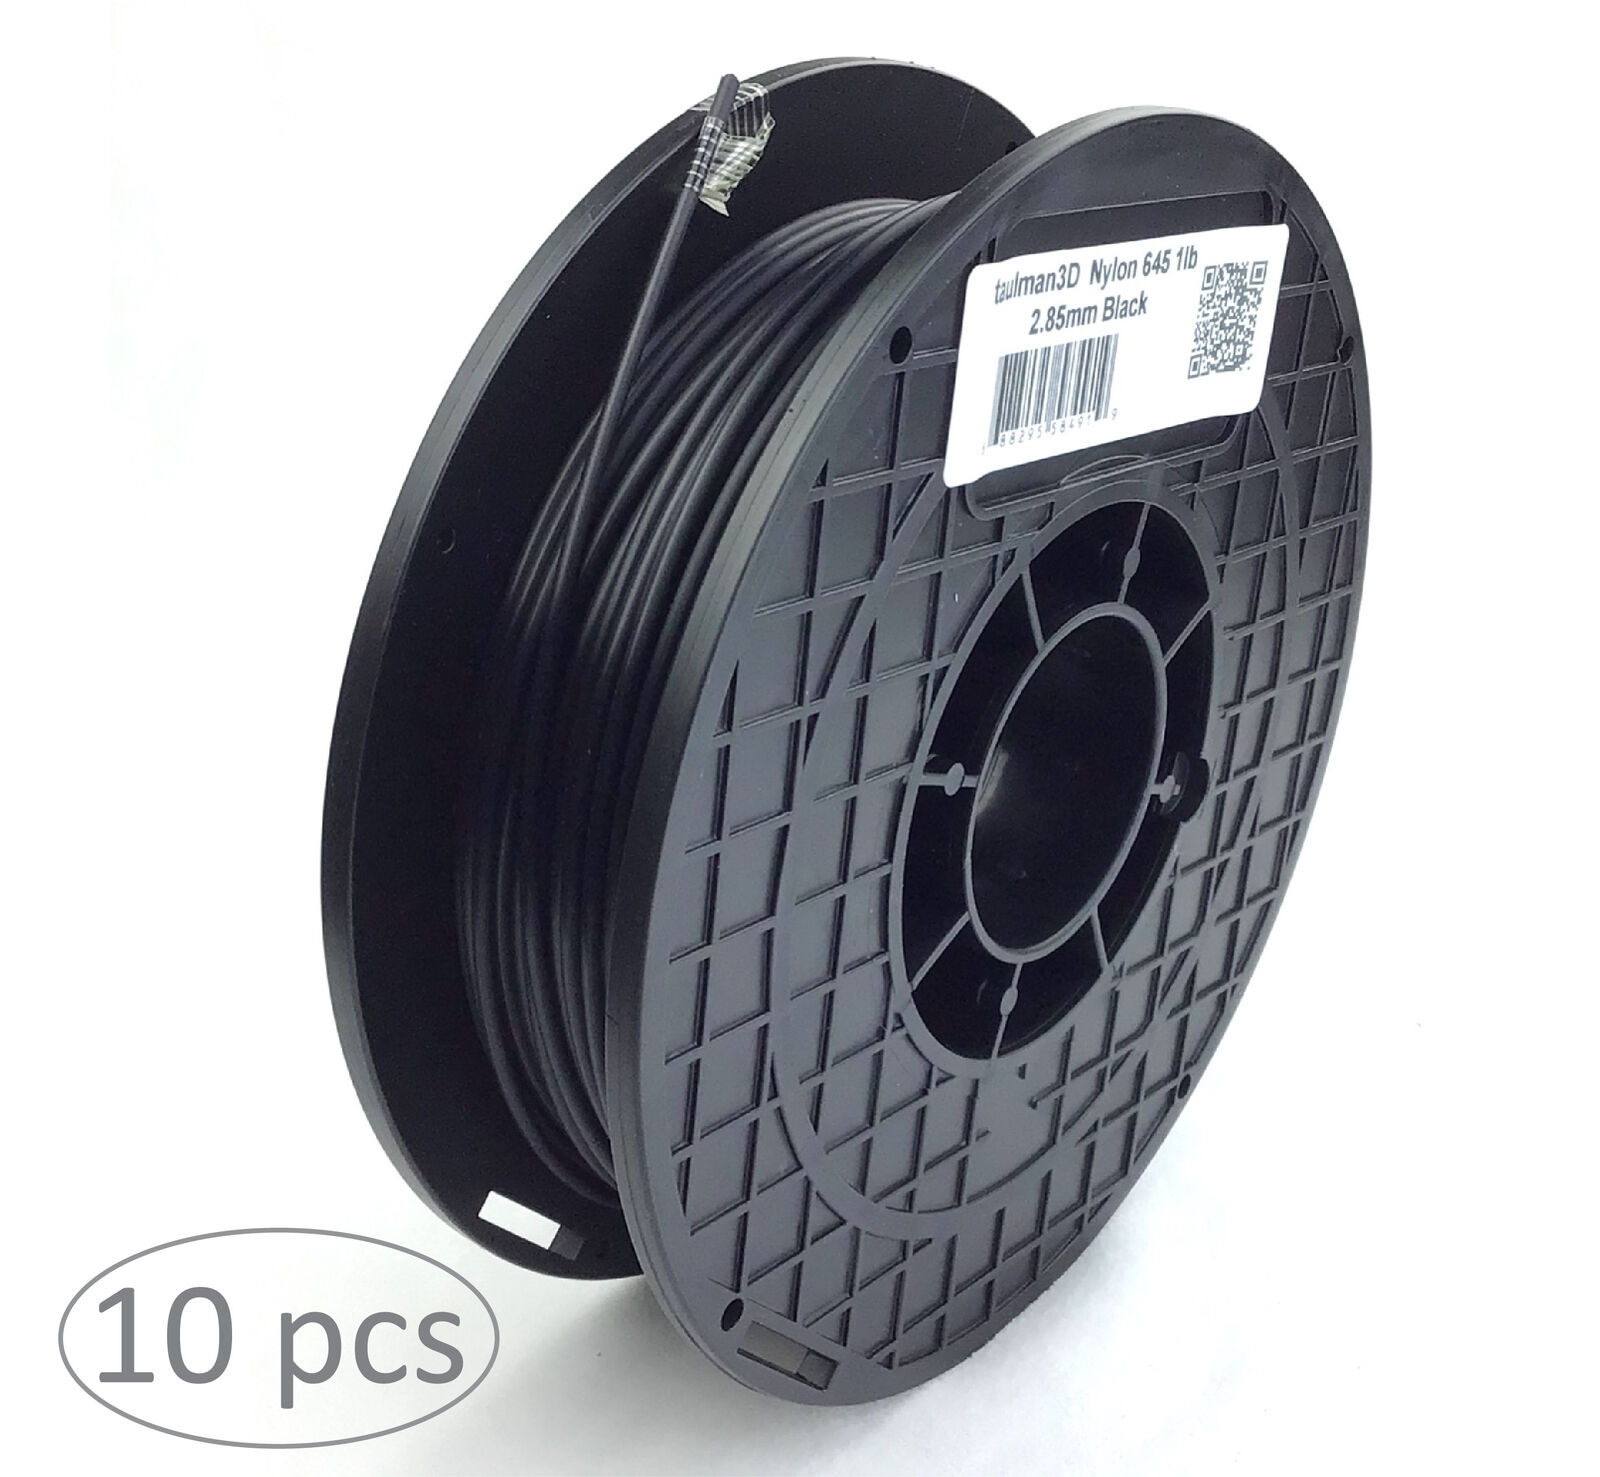 [3DMakerWorld] taulman3D 645 Industrial Nylon Filament - 3mm, Black, 10 pack